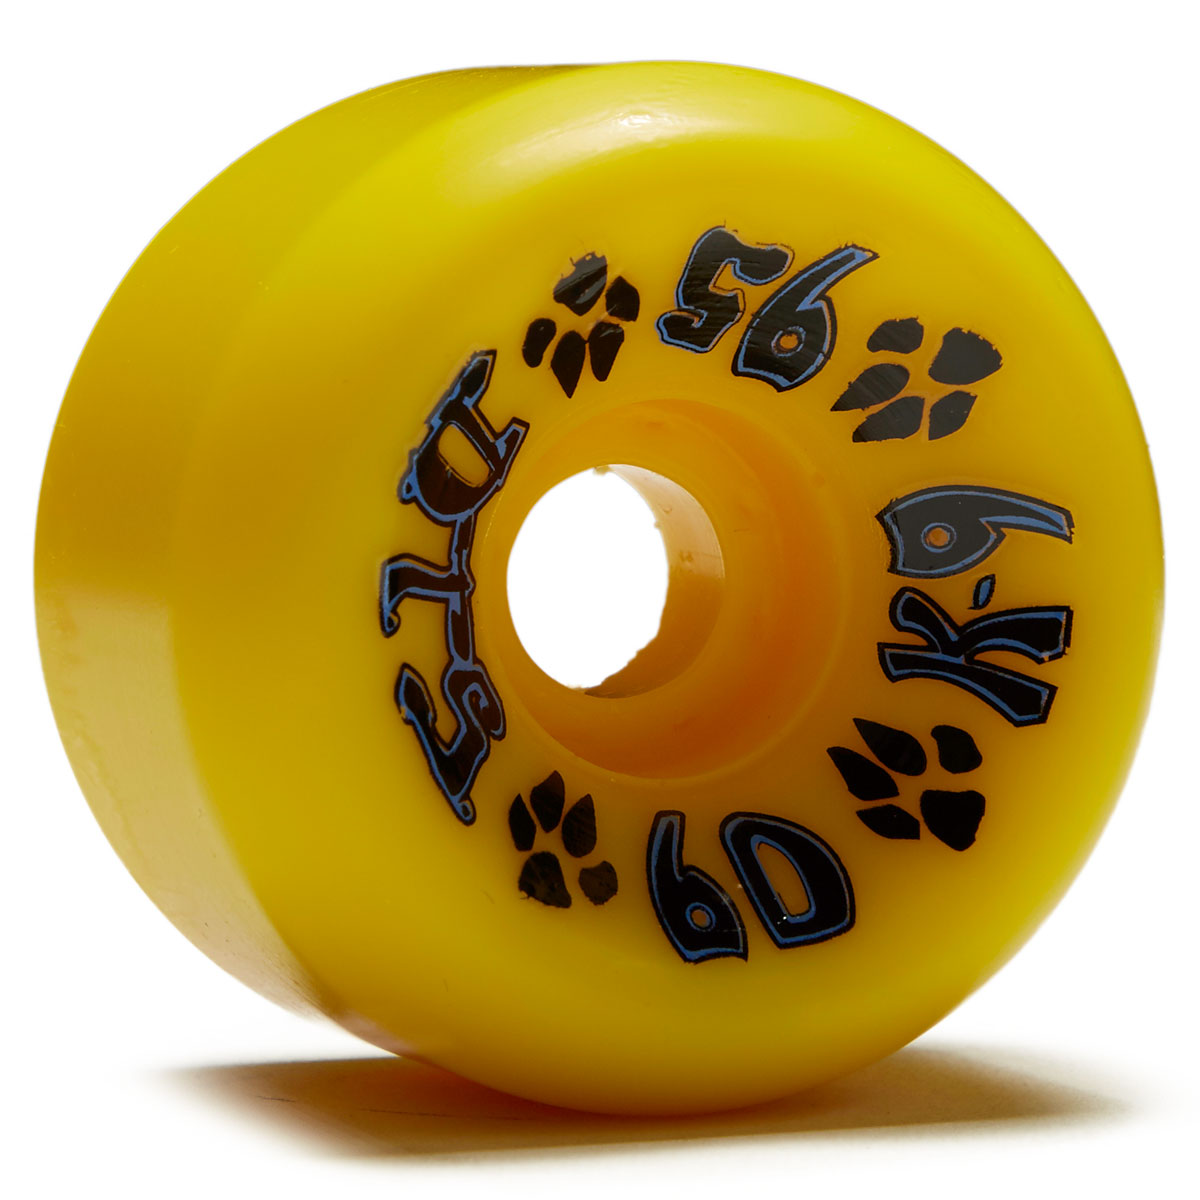 Dogtown K-9 95a Skateboard Wheels - Yellow - 60mm image 1